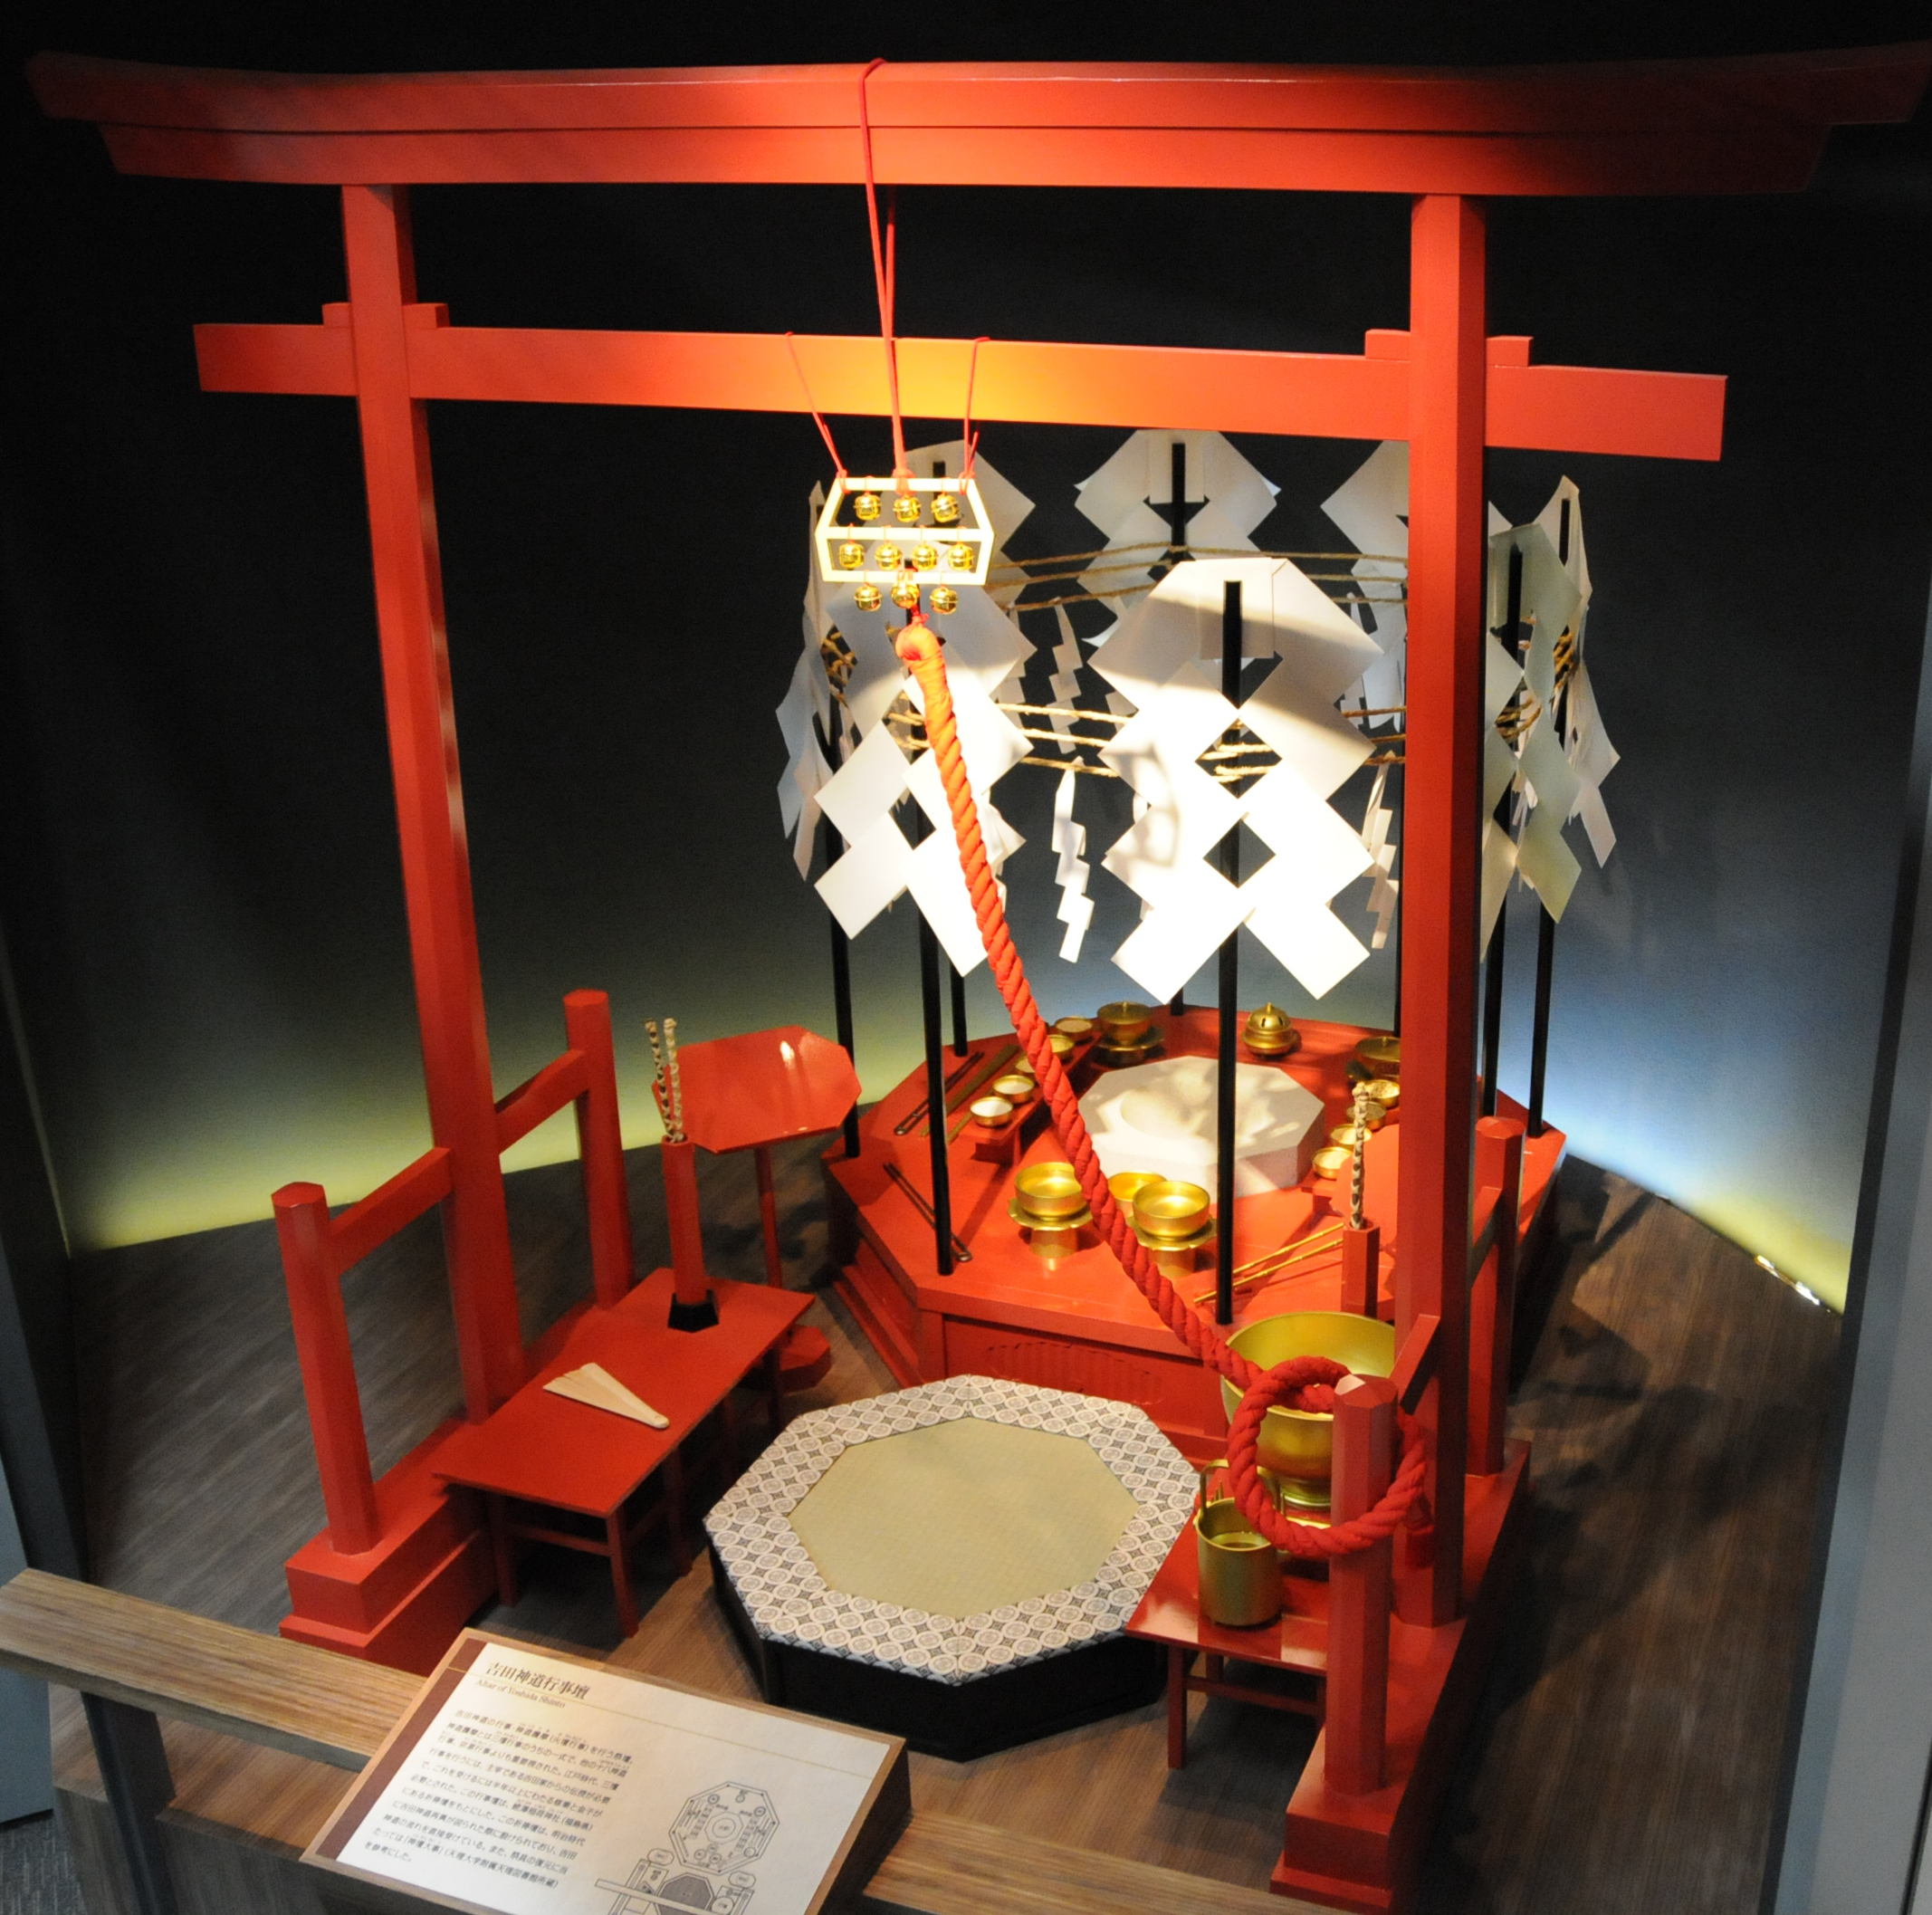 신도神道 | 國學院大學博物館 考古と神道で知る日本の文化・歴史 